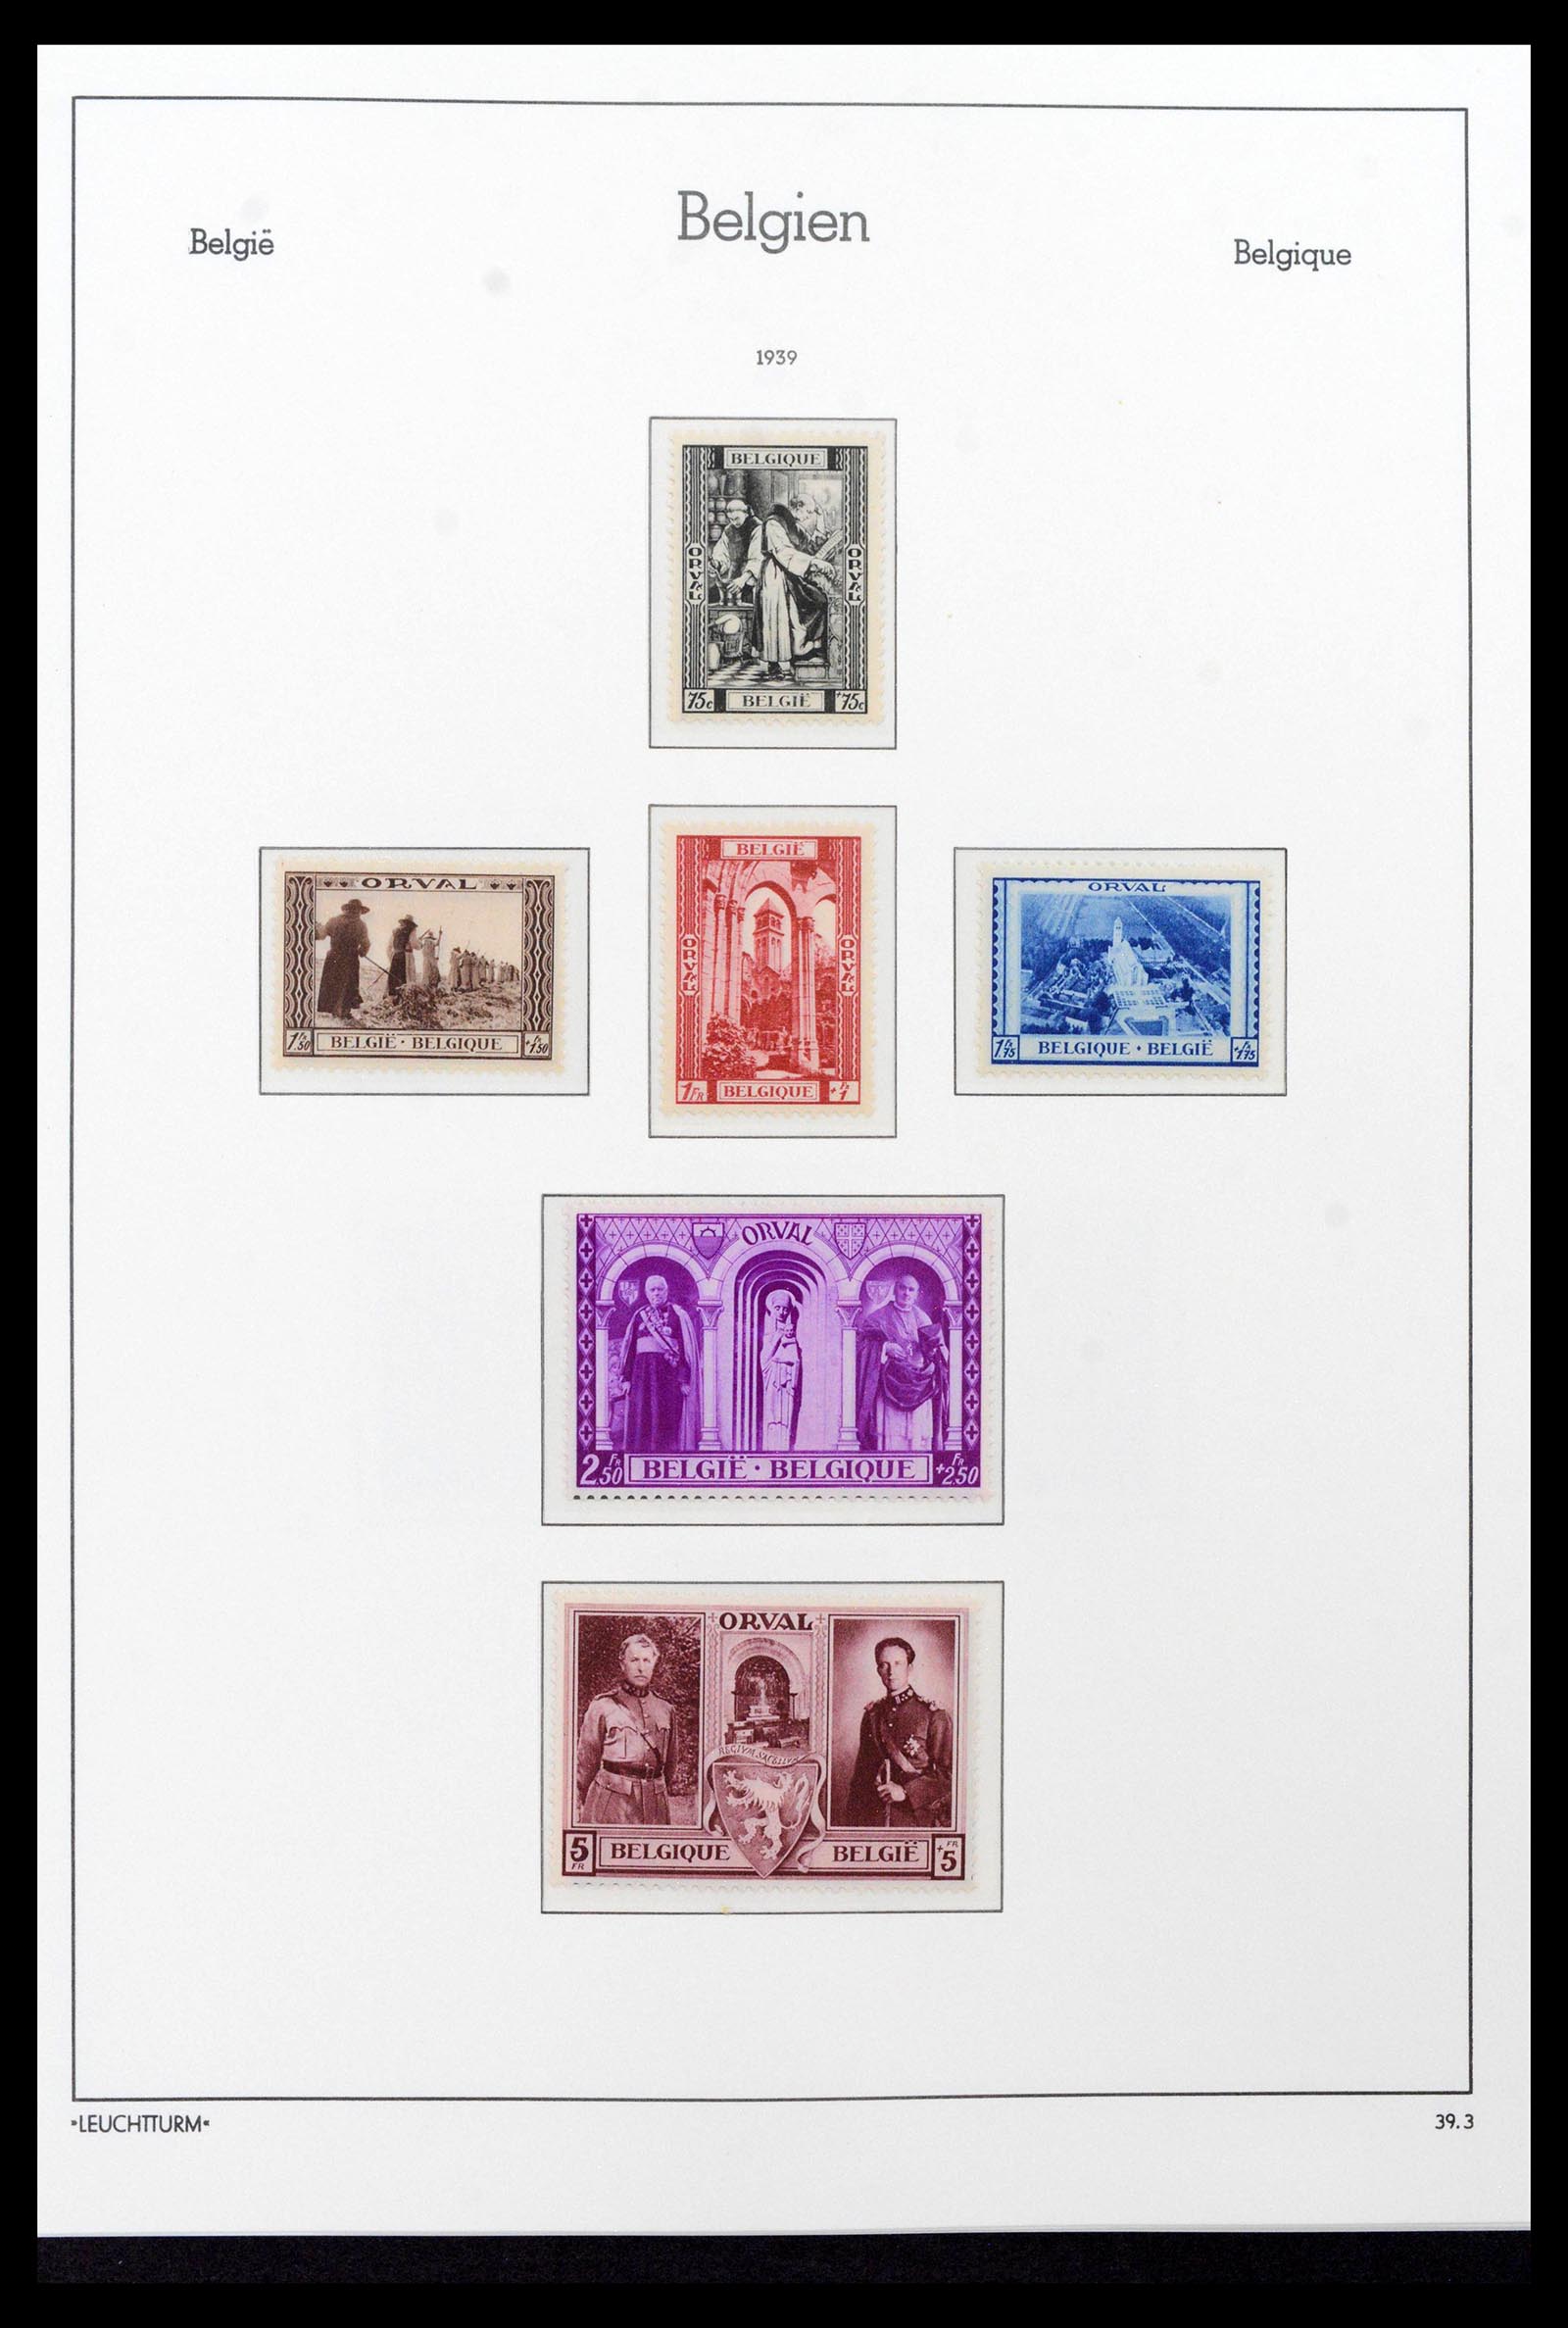 39137 0072 - Stamp collection 39137 Belgium 1849-2002.